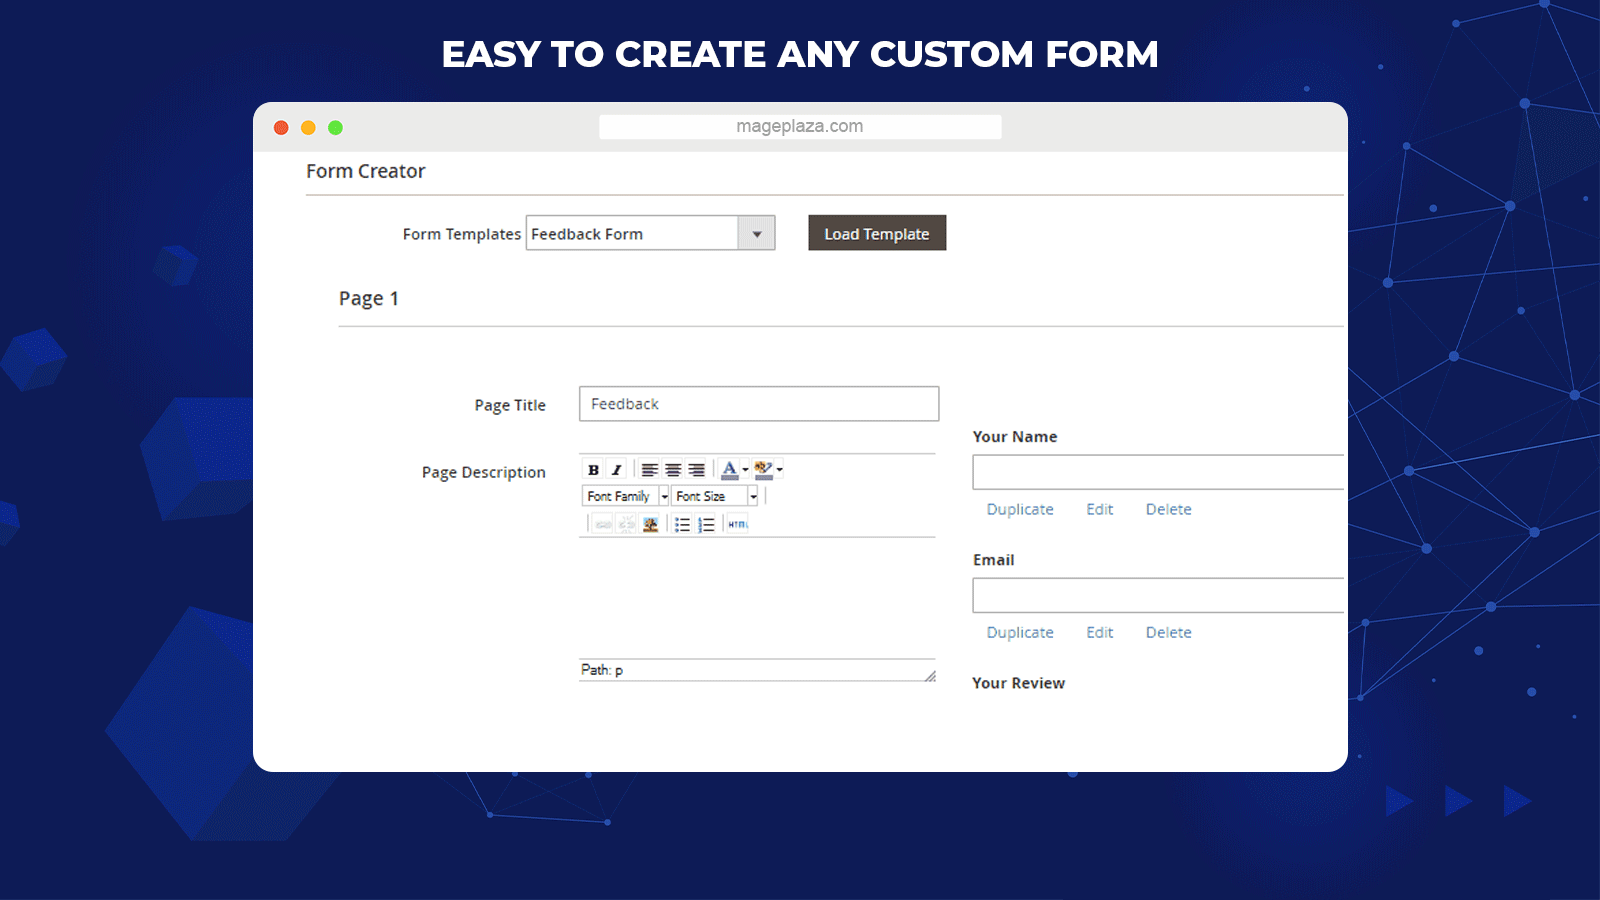 magento 2 Custom Form extension